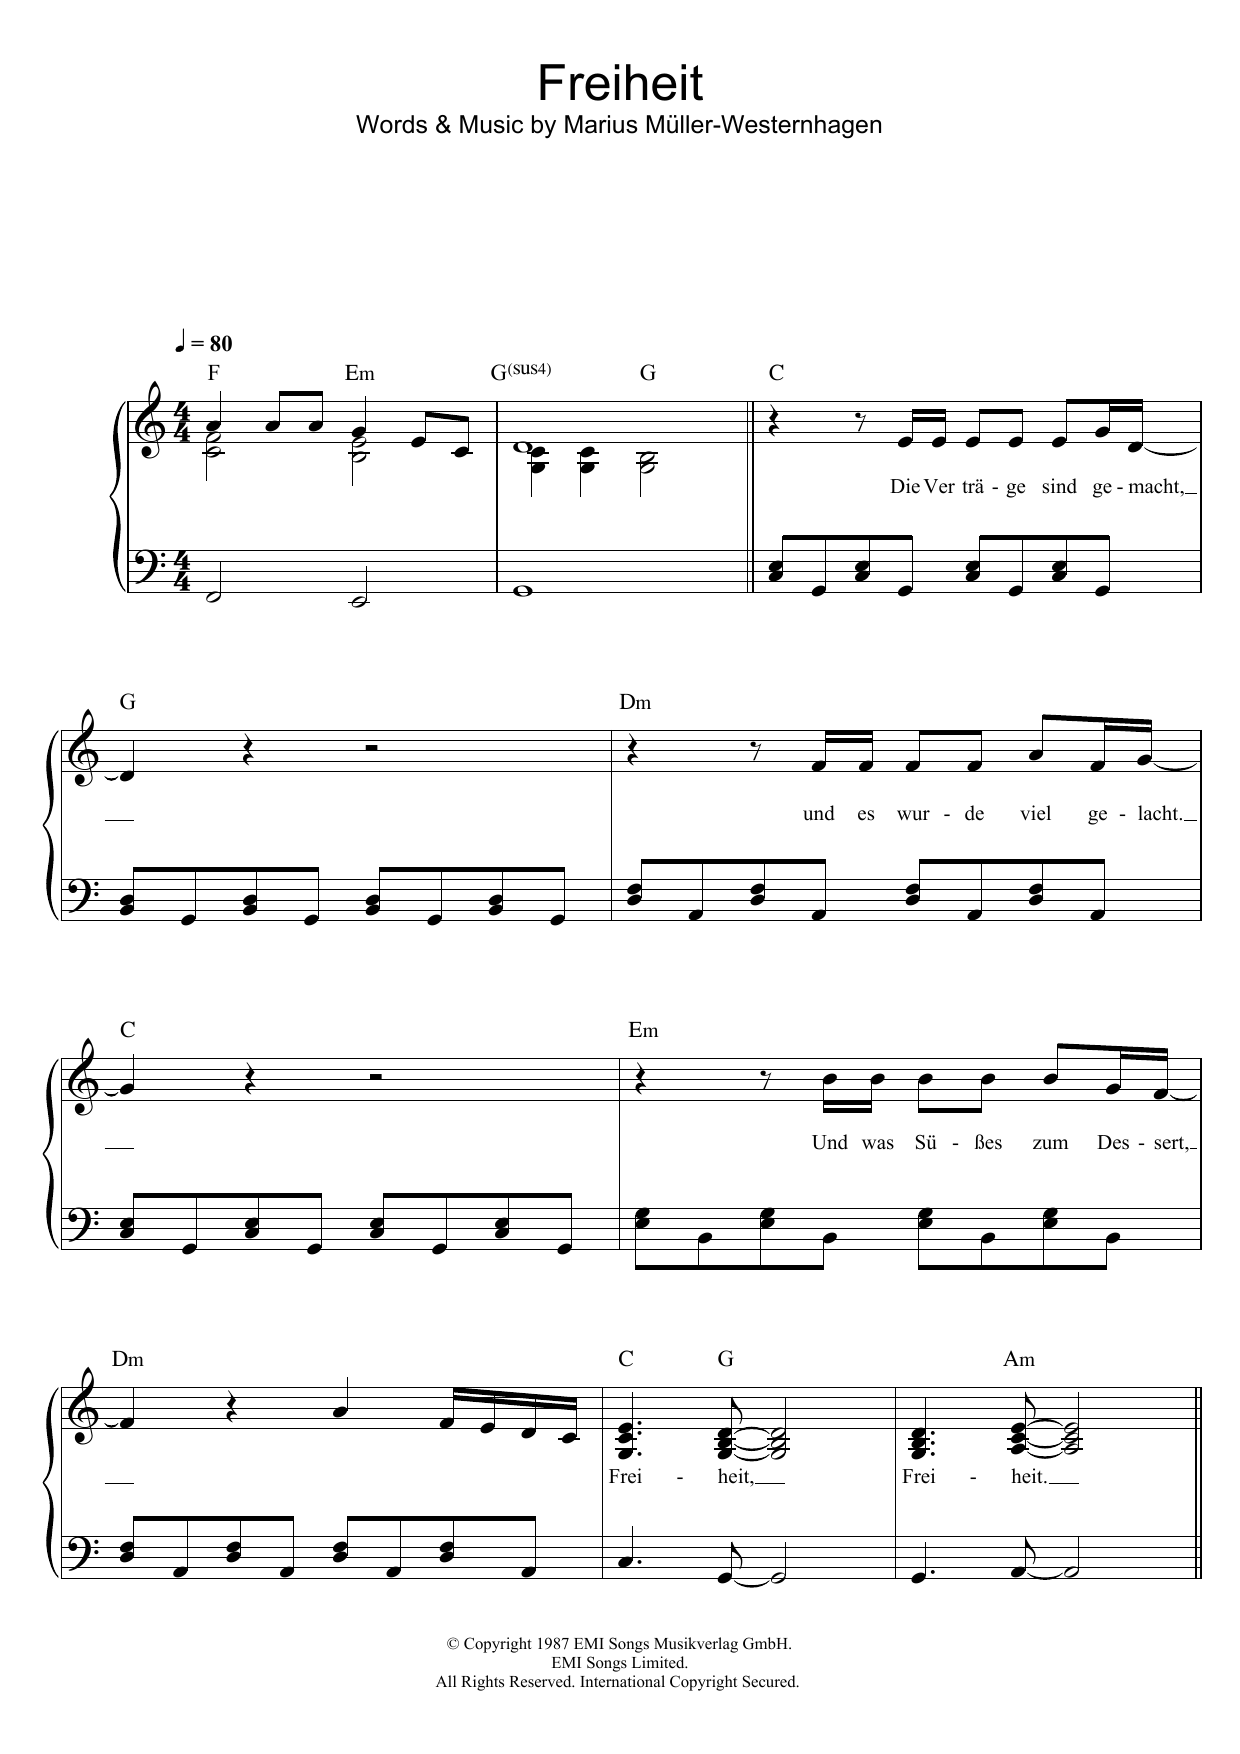 Marius Müller-Westernhagen Freiheit Sheet Music Notes & Chords for Piano & Vocal - Download or Print PDF